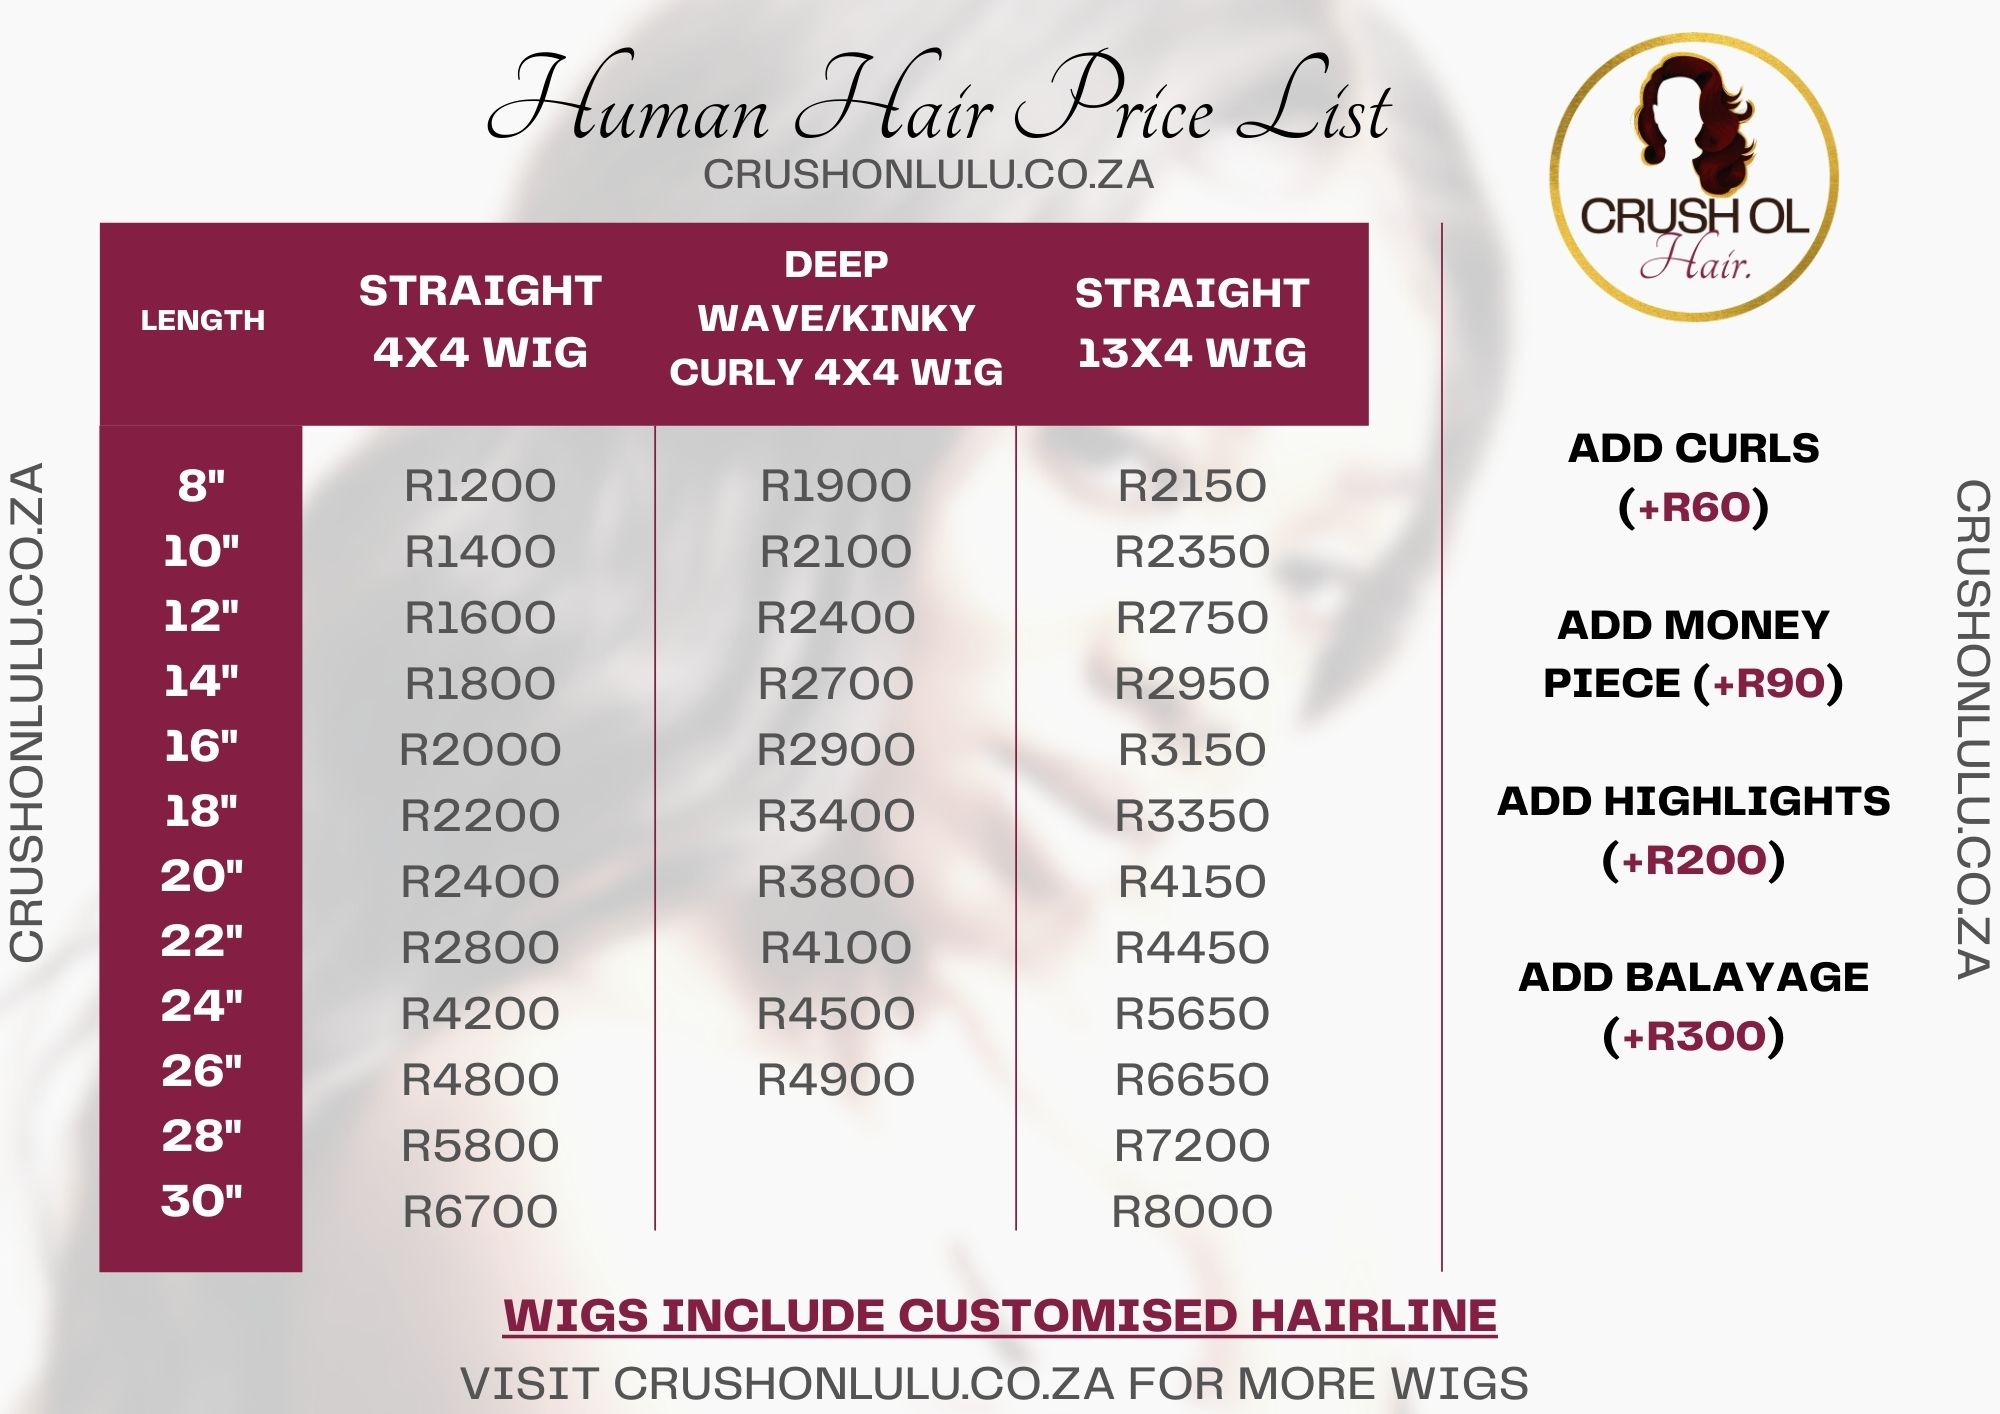 Human hair price lists